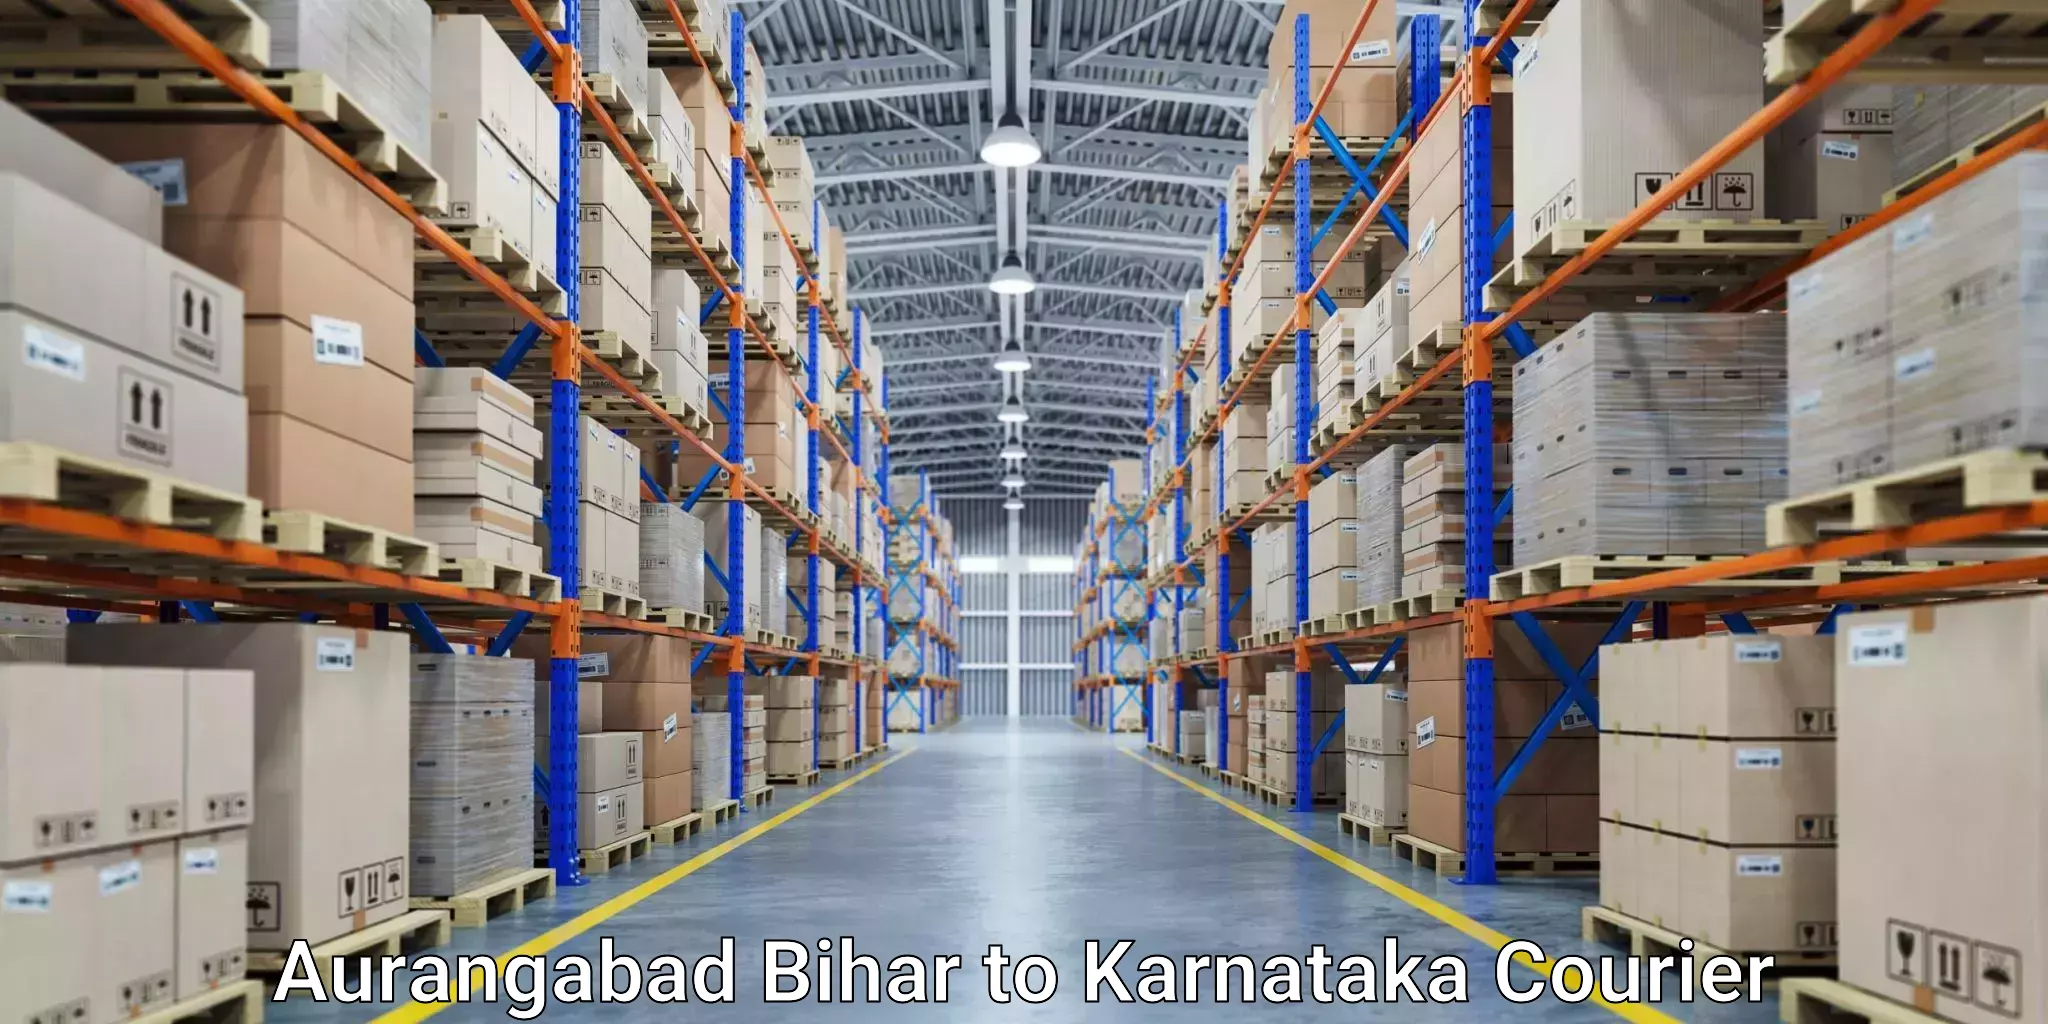 Package tracking Aurangabad Bihar to Sindagi